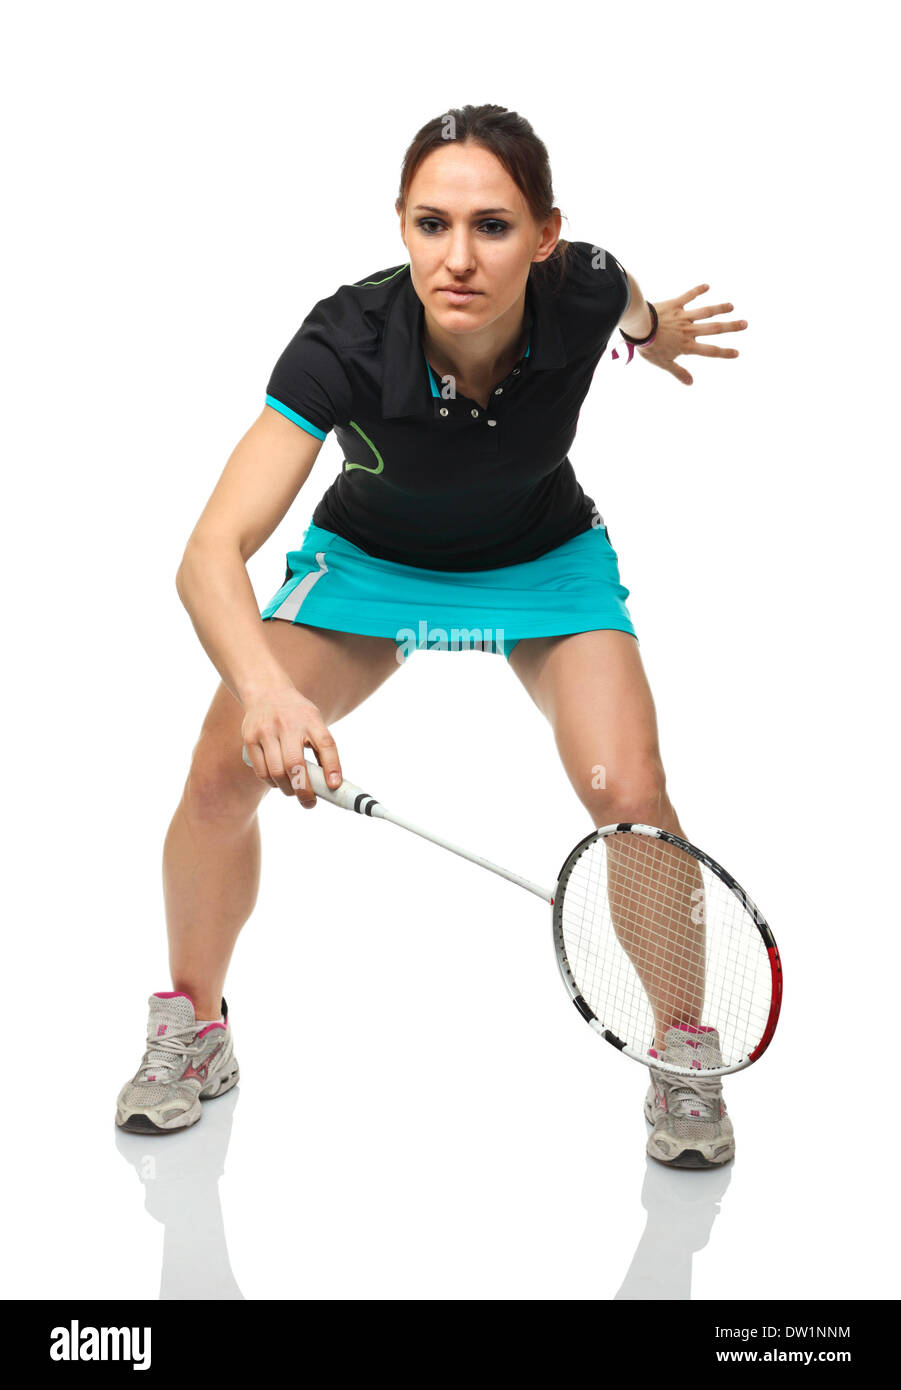 badminton player portrait Stock Photo